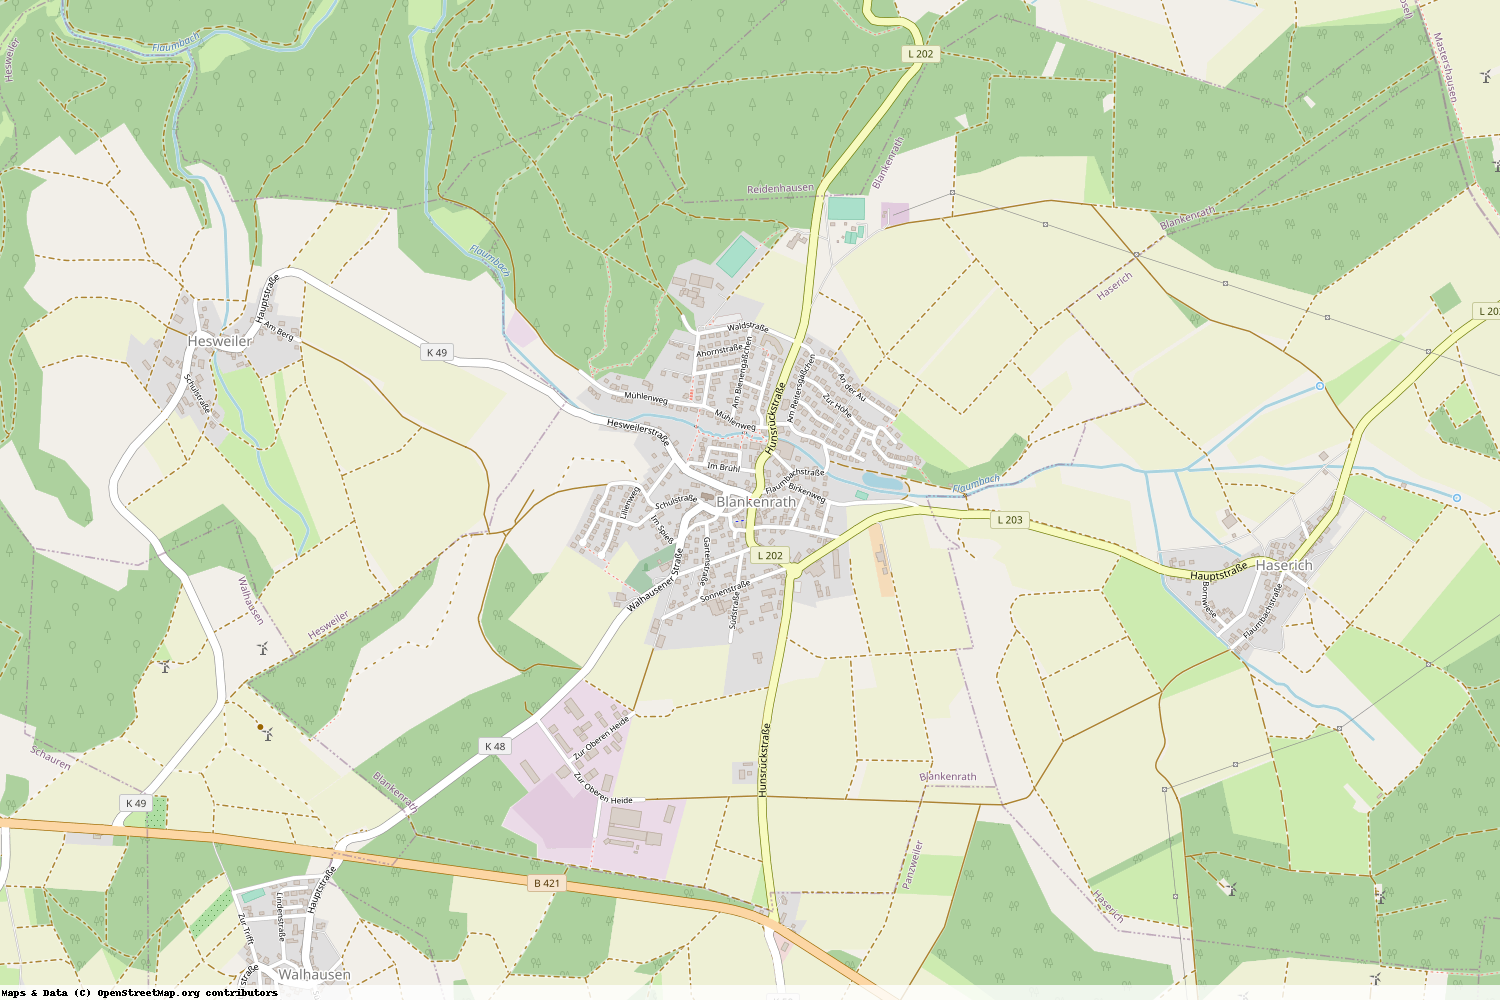 Ist gerade Stromausfall in Rheinland-Pfalz - Cochem-Zell - Blankenrath?